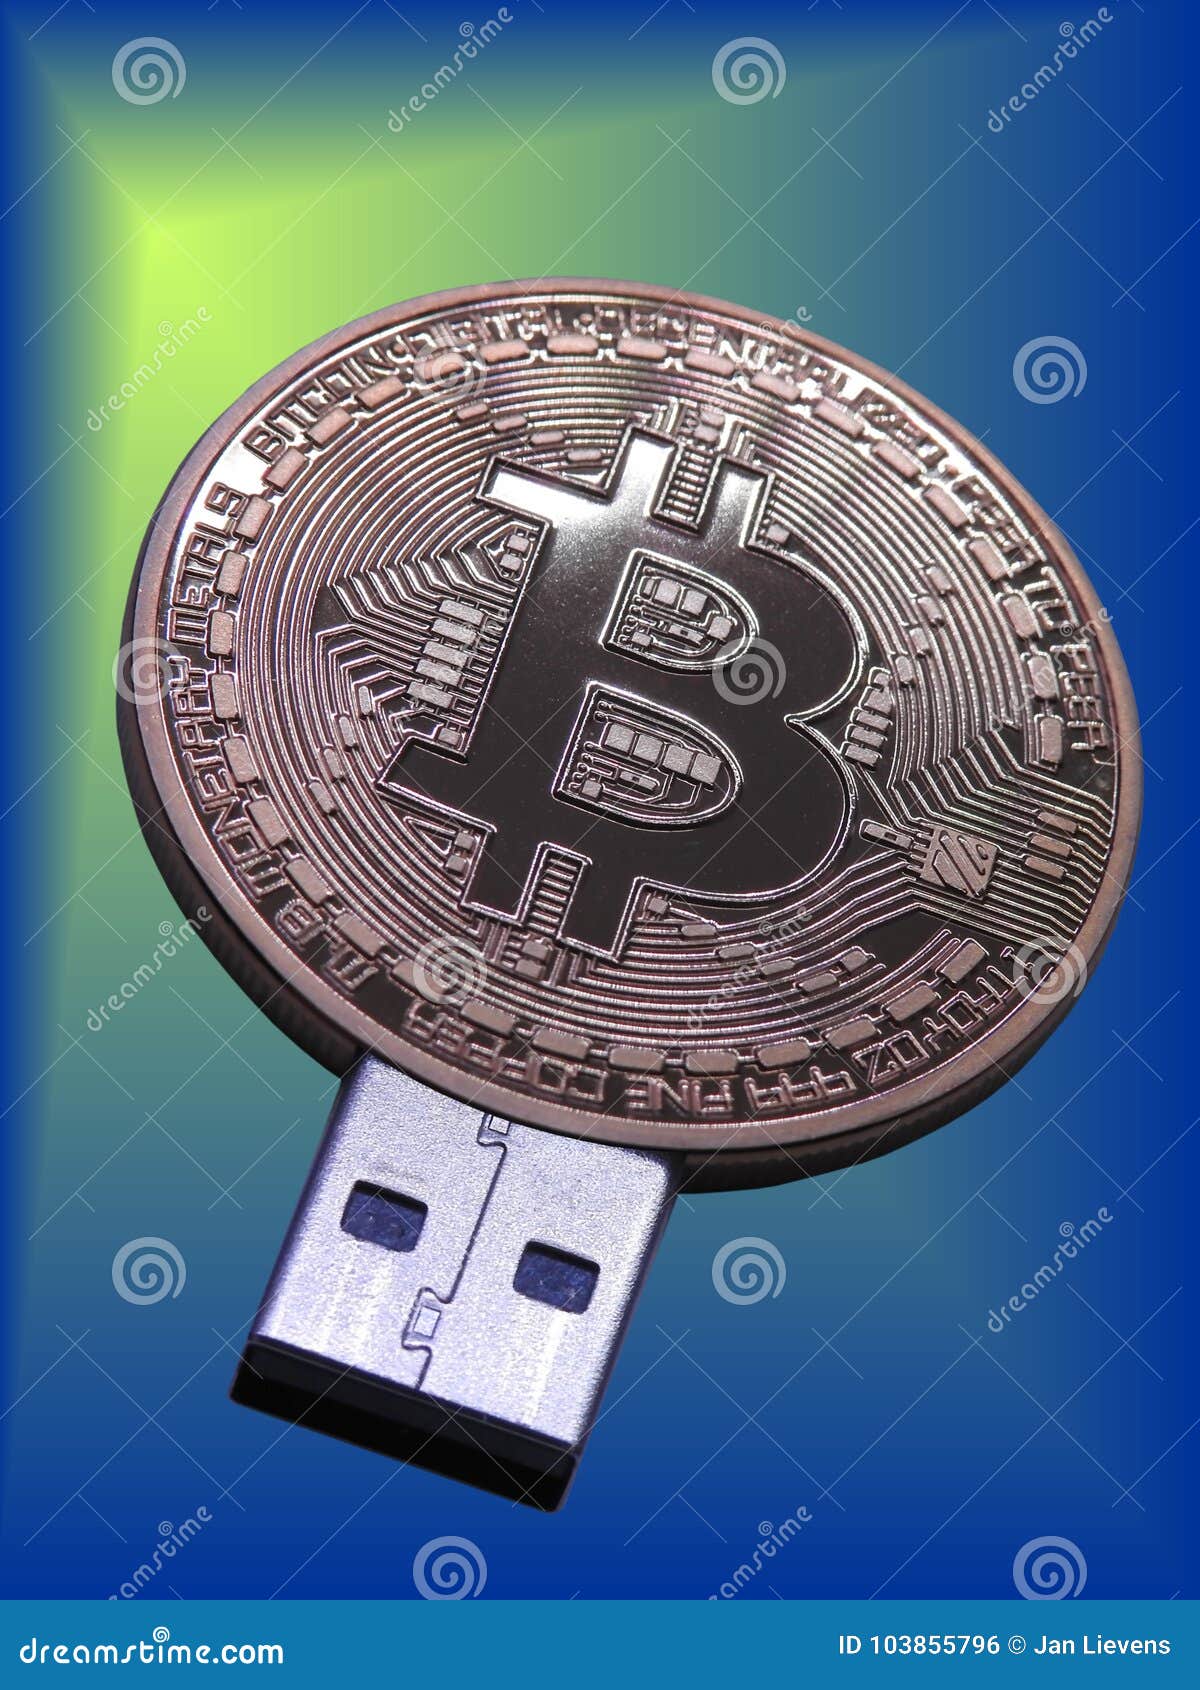 Bitcoin wallet usb stick - Demo trading crypto